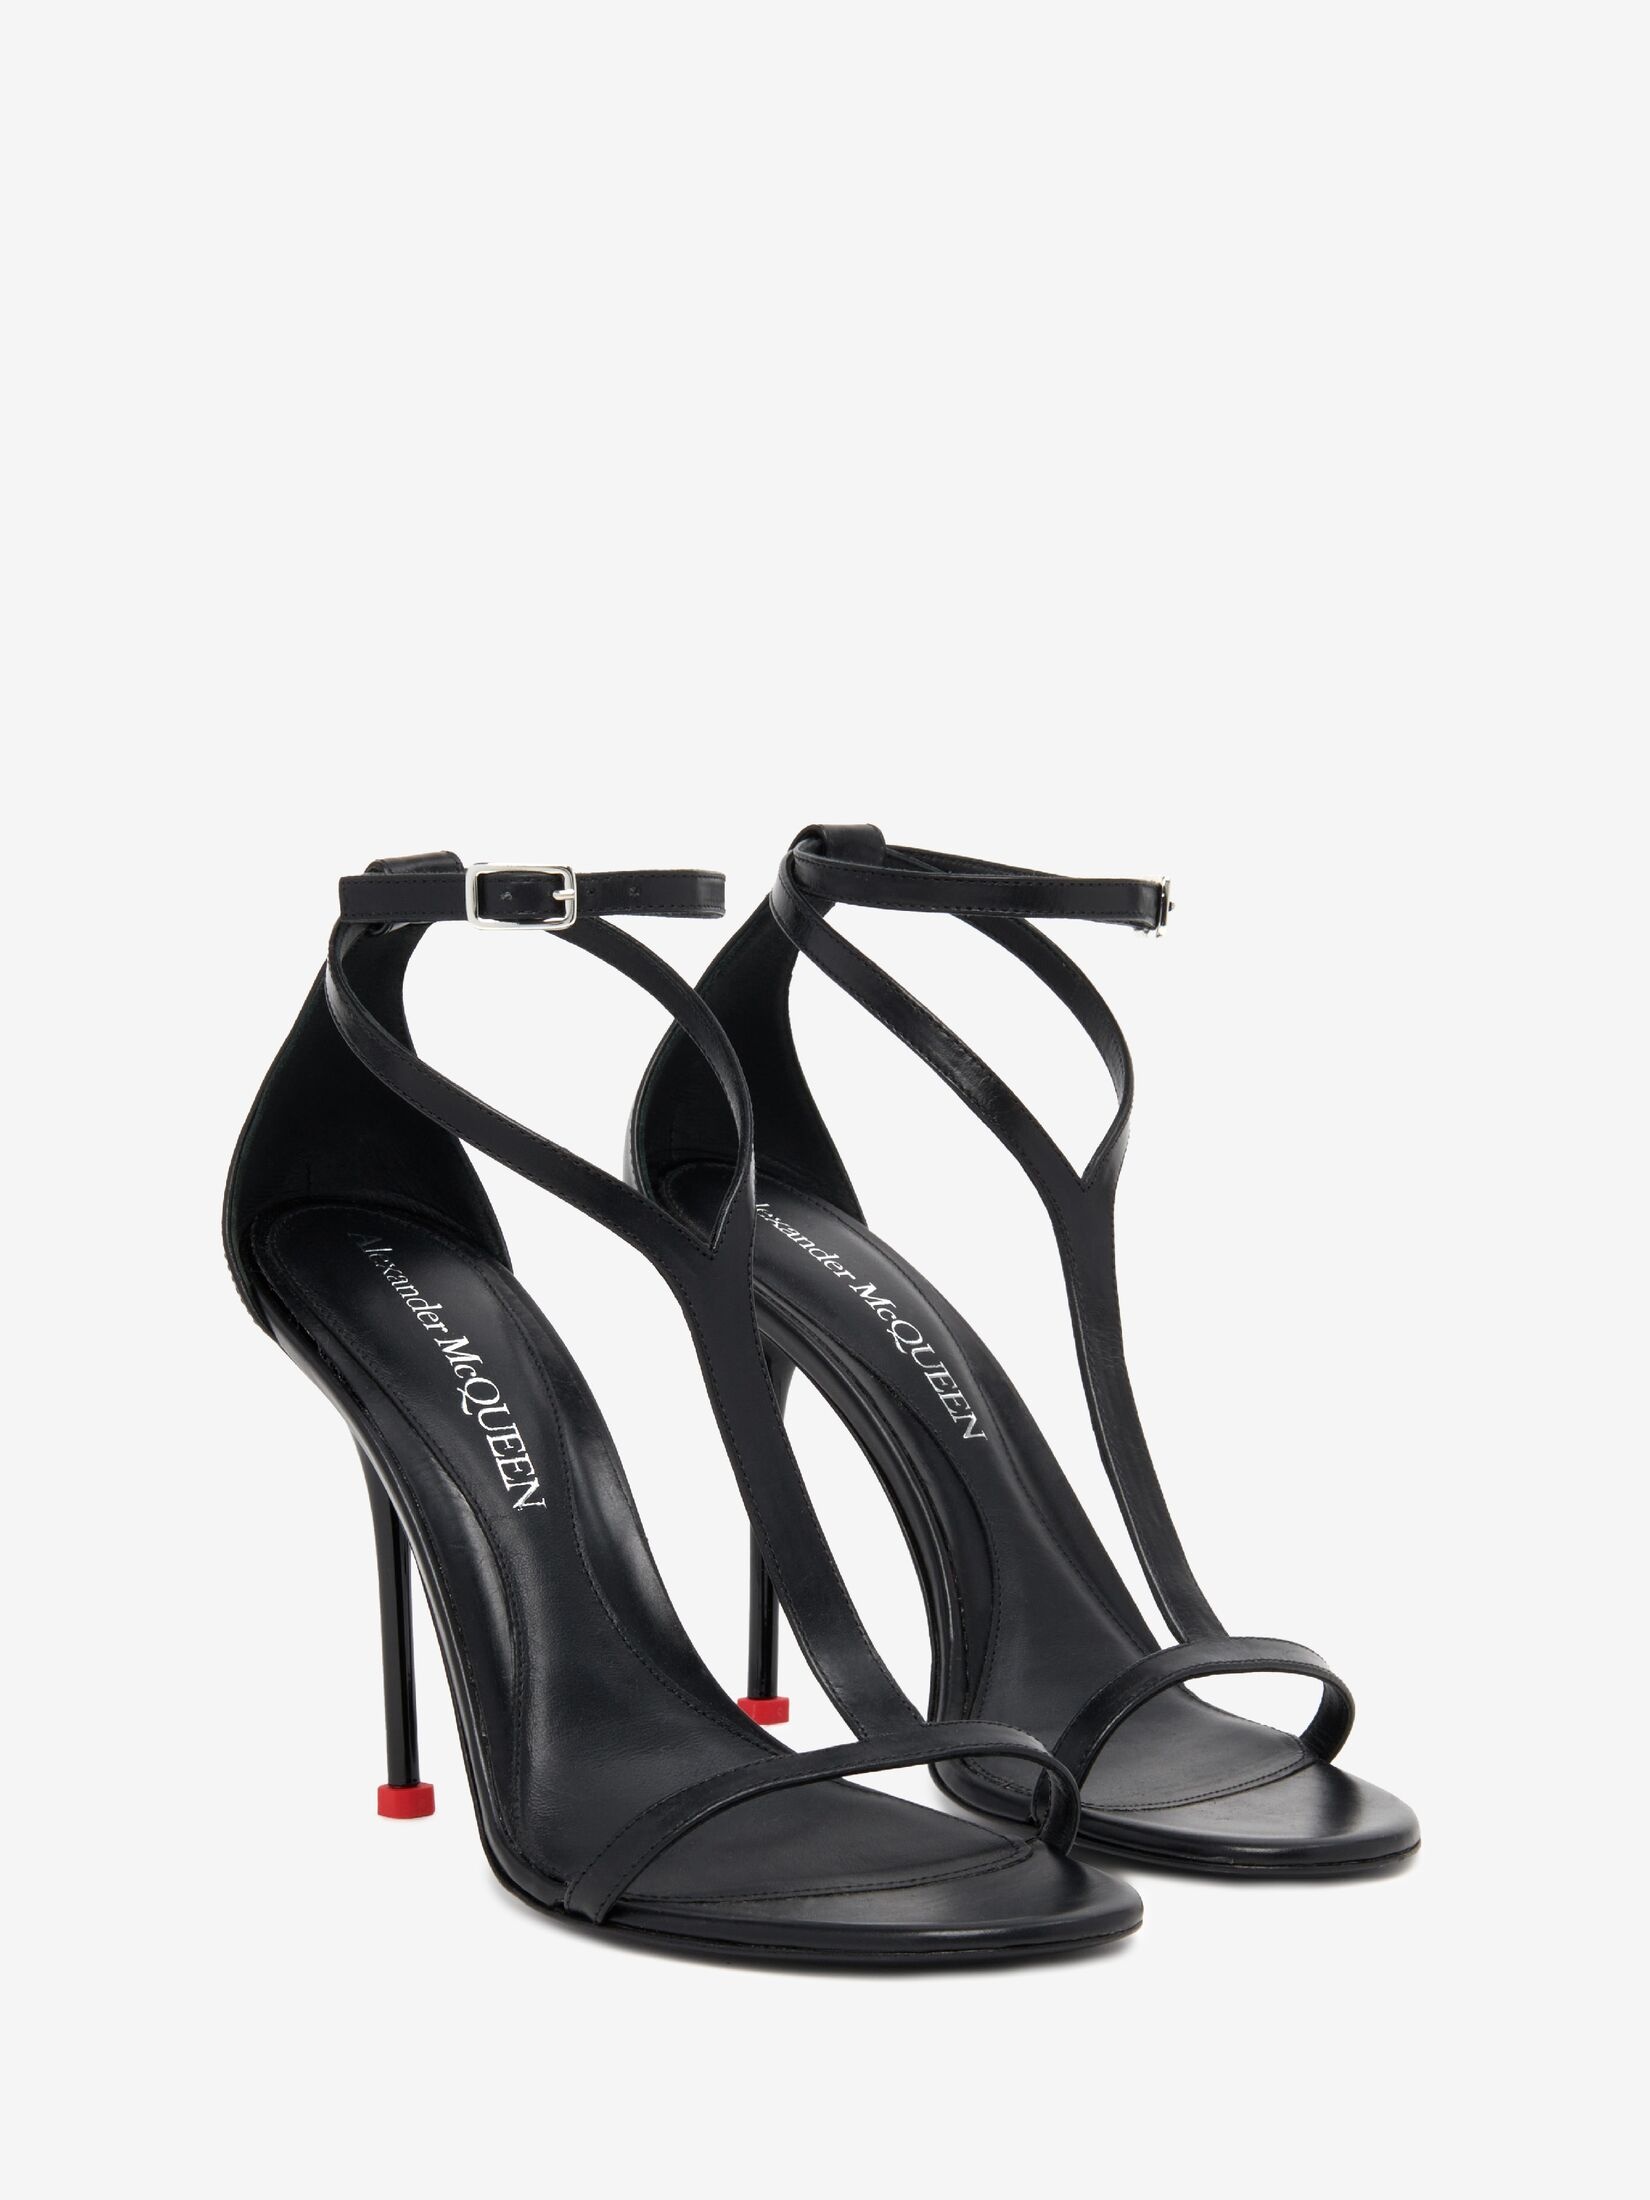 Women's Harness Sandal in Black/lust Red - 2